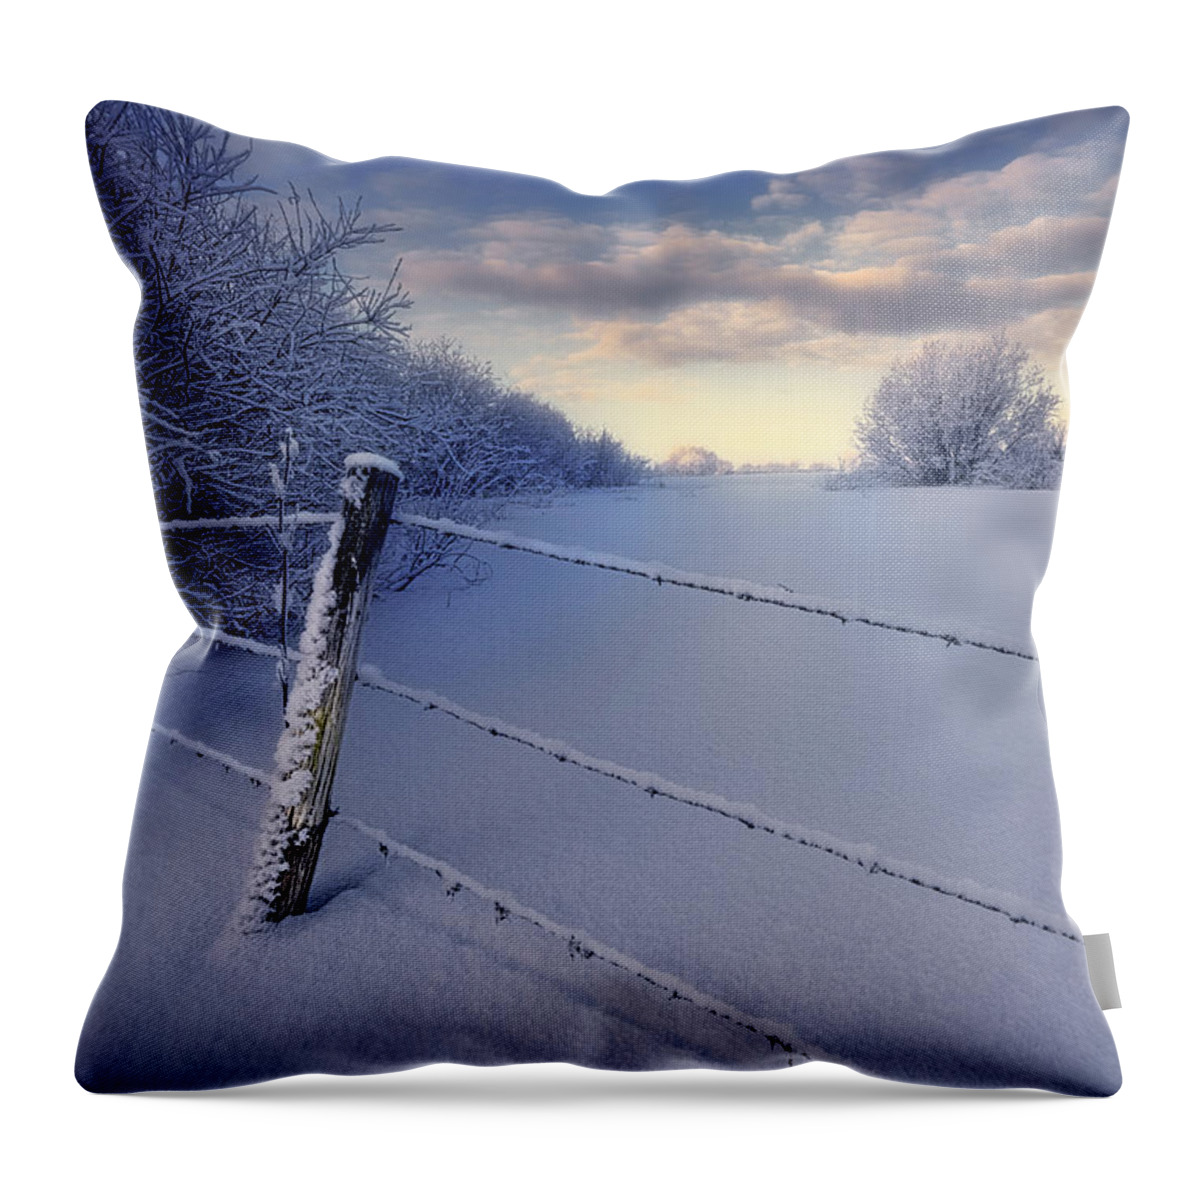 Winter Throw Pillow featuring the photograph On Frozen Pond by Dan Jurak